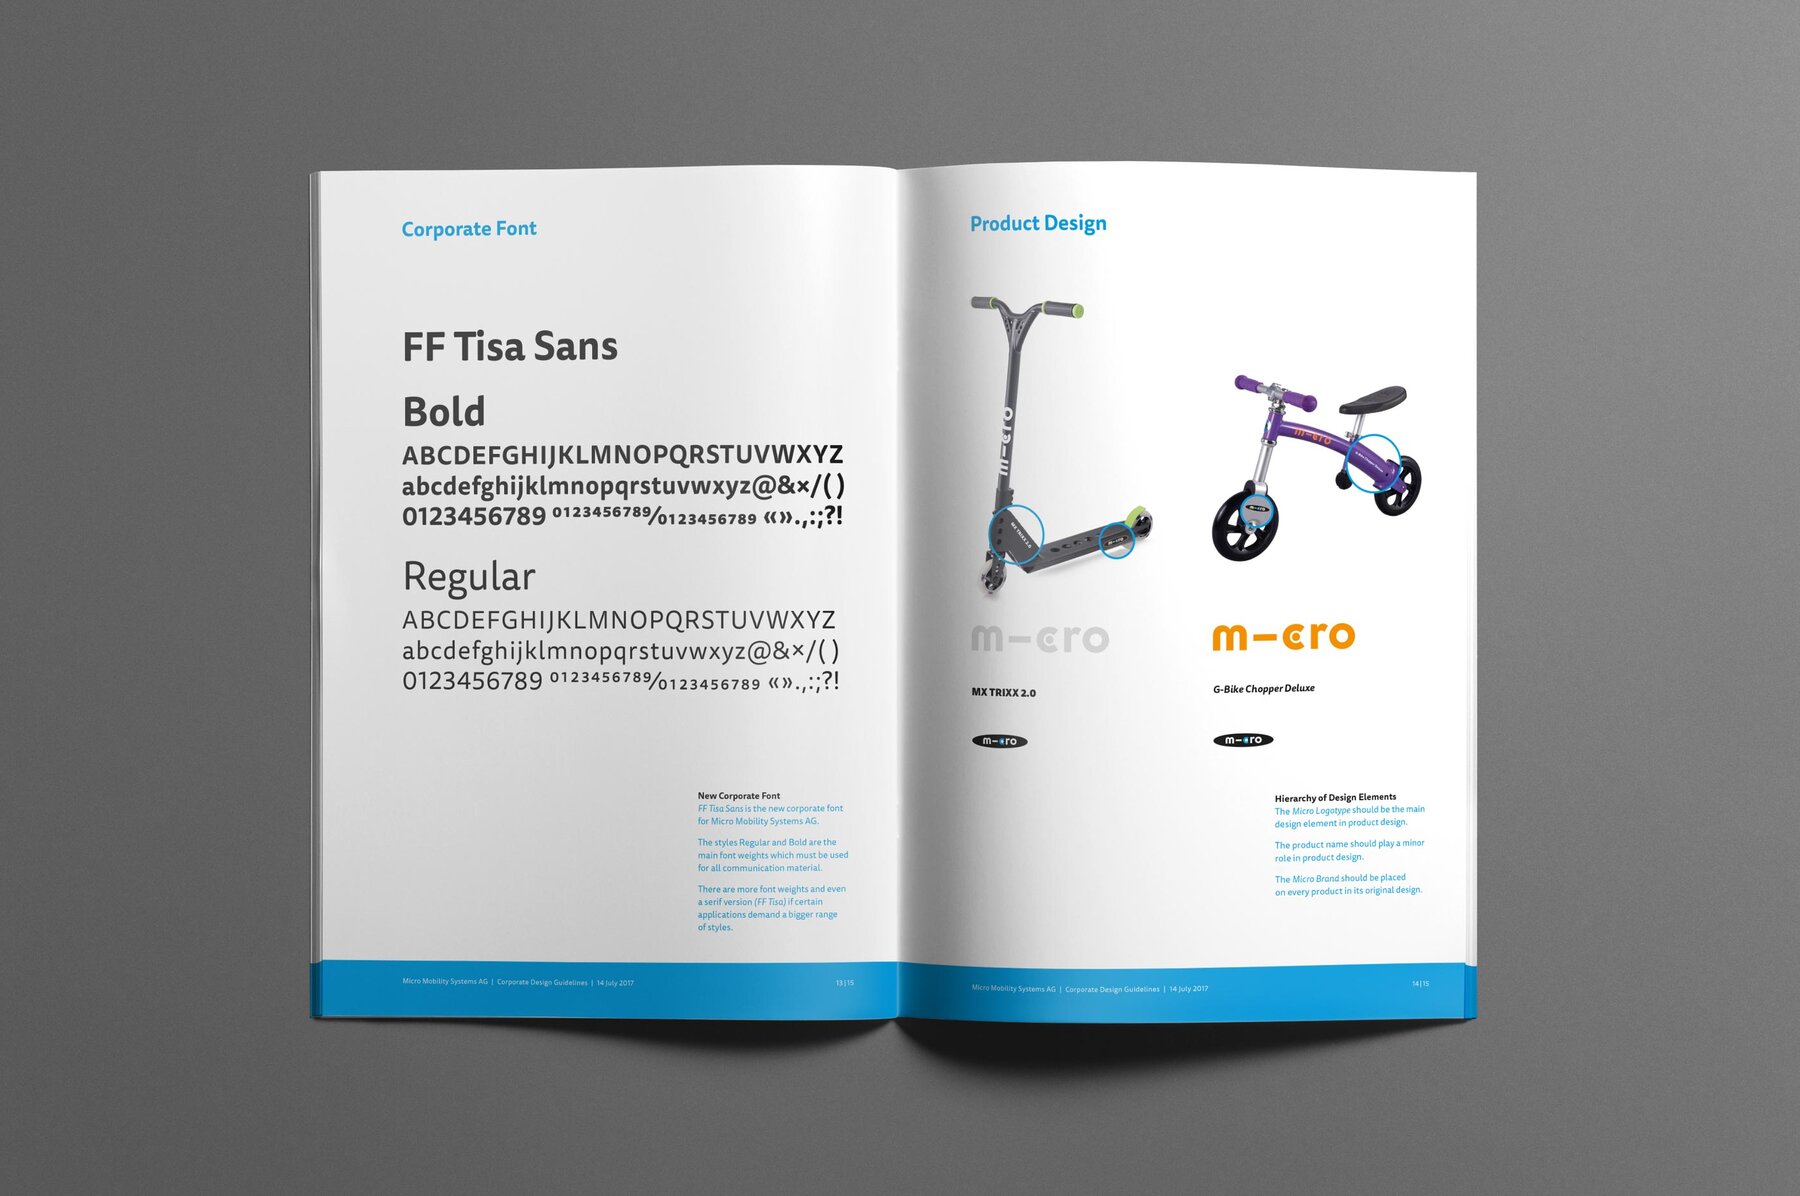 Corporate Design Guidelines Font FF Tisa Sans und product design